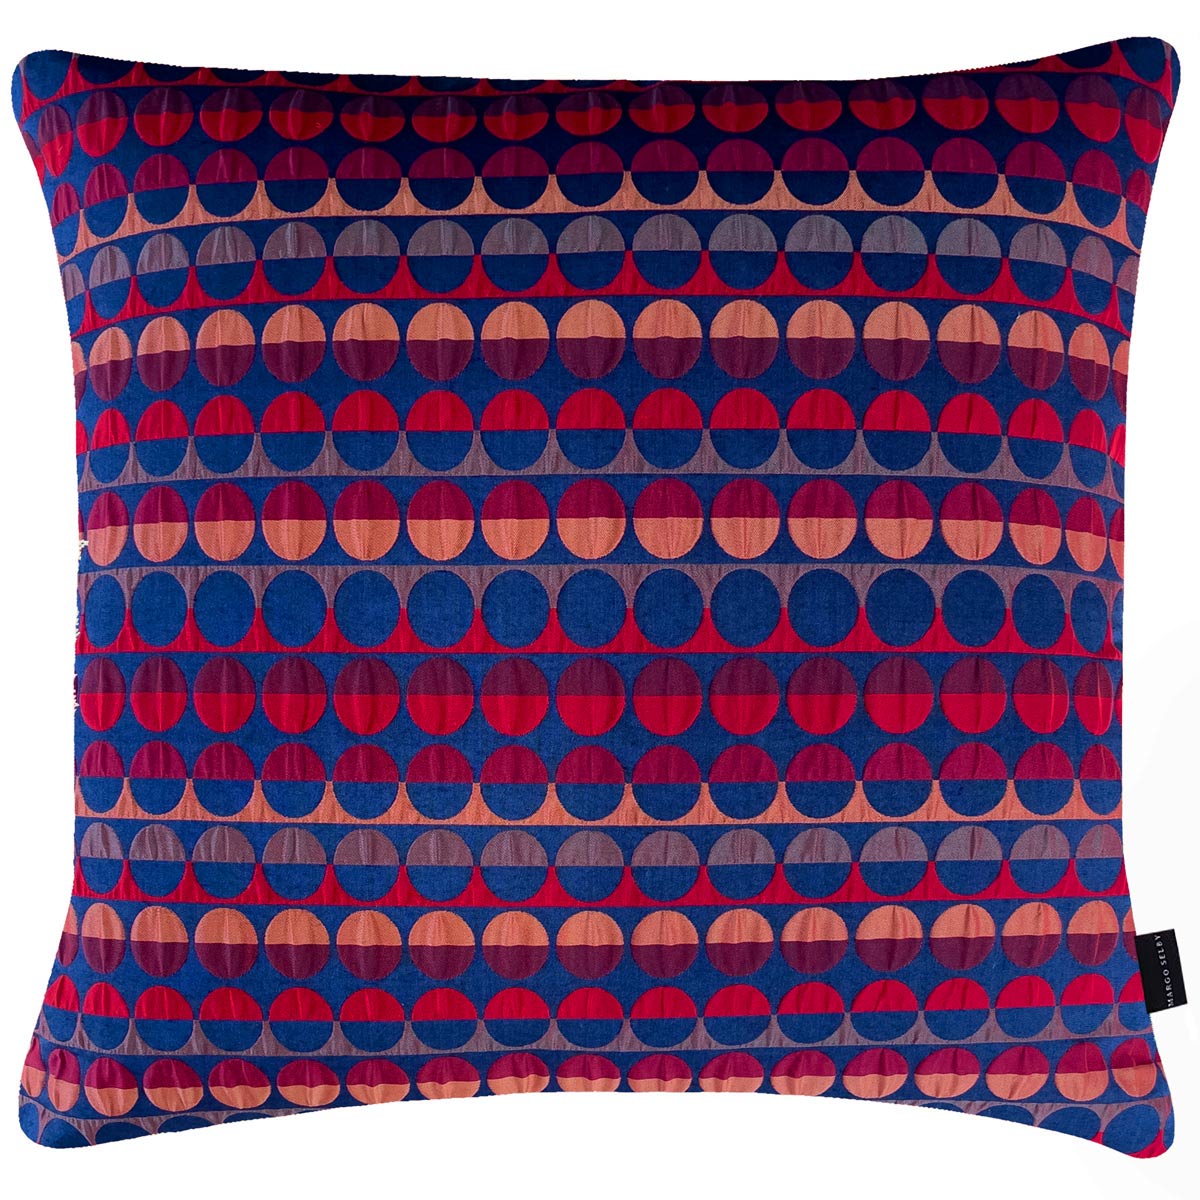 Designer cushion, Decorative cushion, Geometric cushion, Colourful cushion, Luxury cushion, Seat cushion,  couch cushion covers, Cushion cover, red cushion, blue cushion